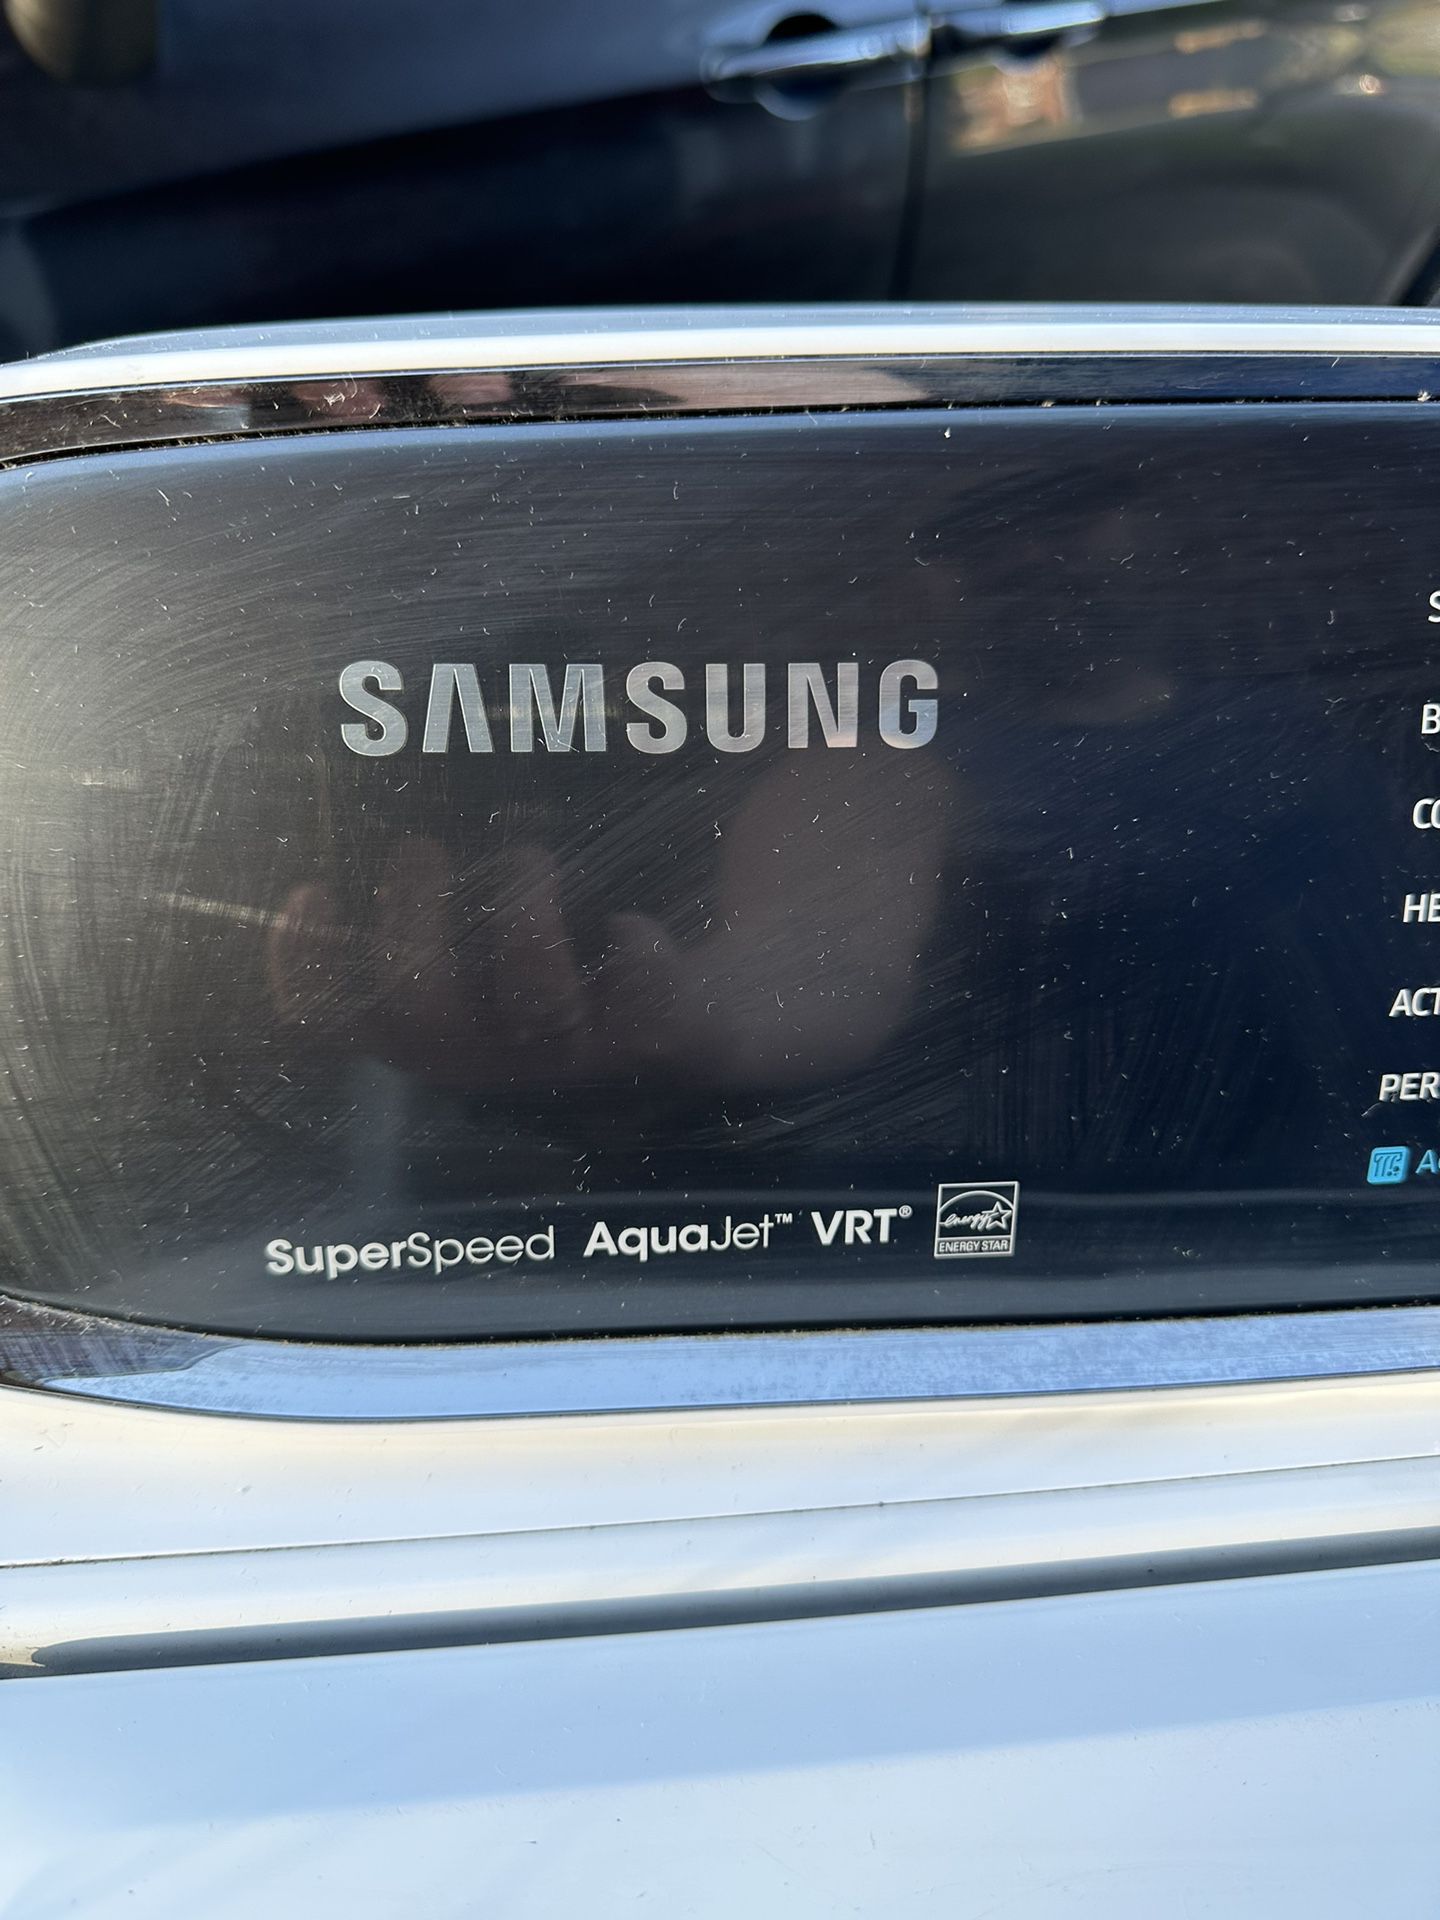 Samsung Superspeed AquaJet Washer